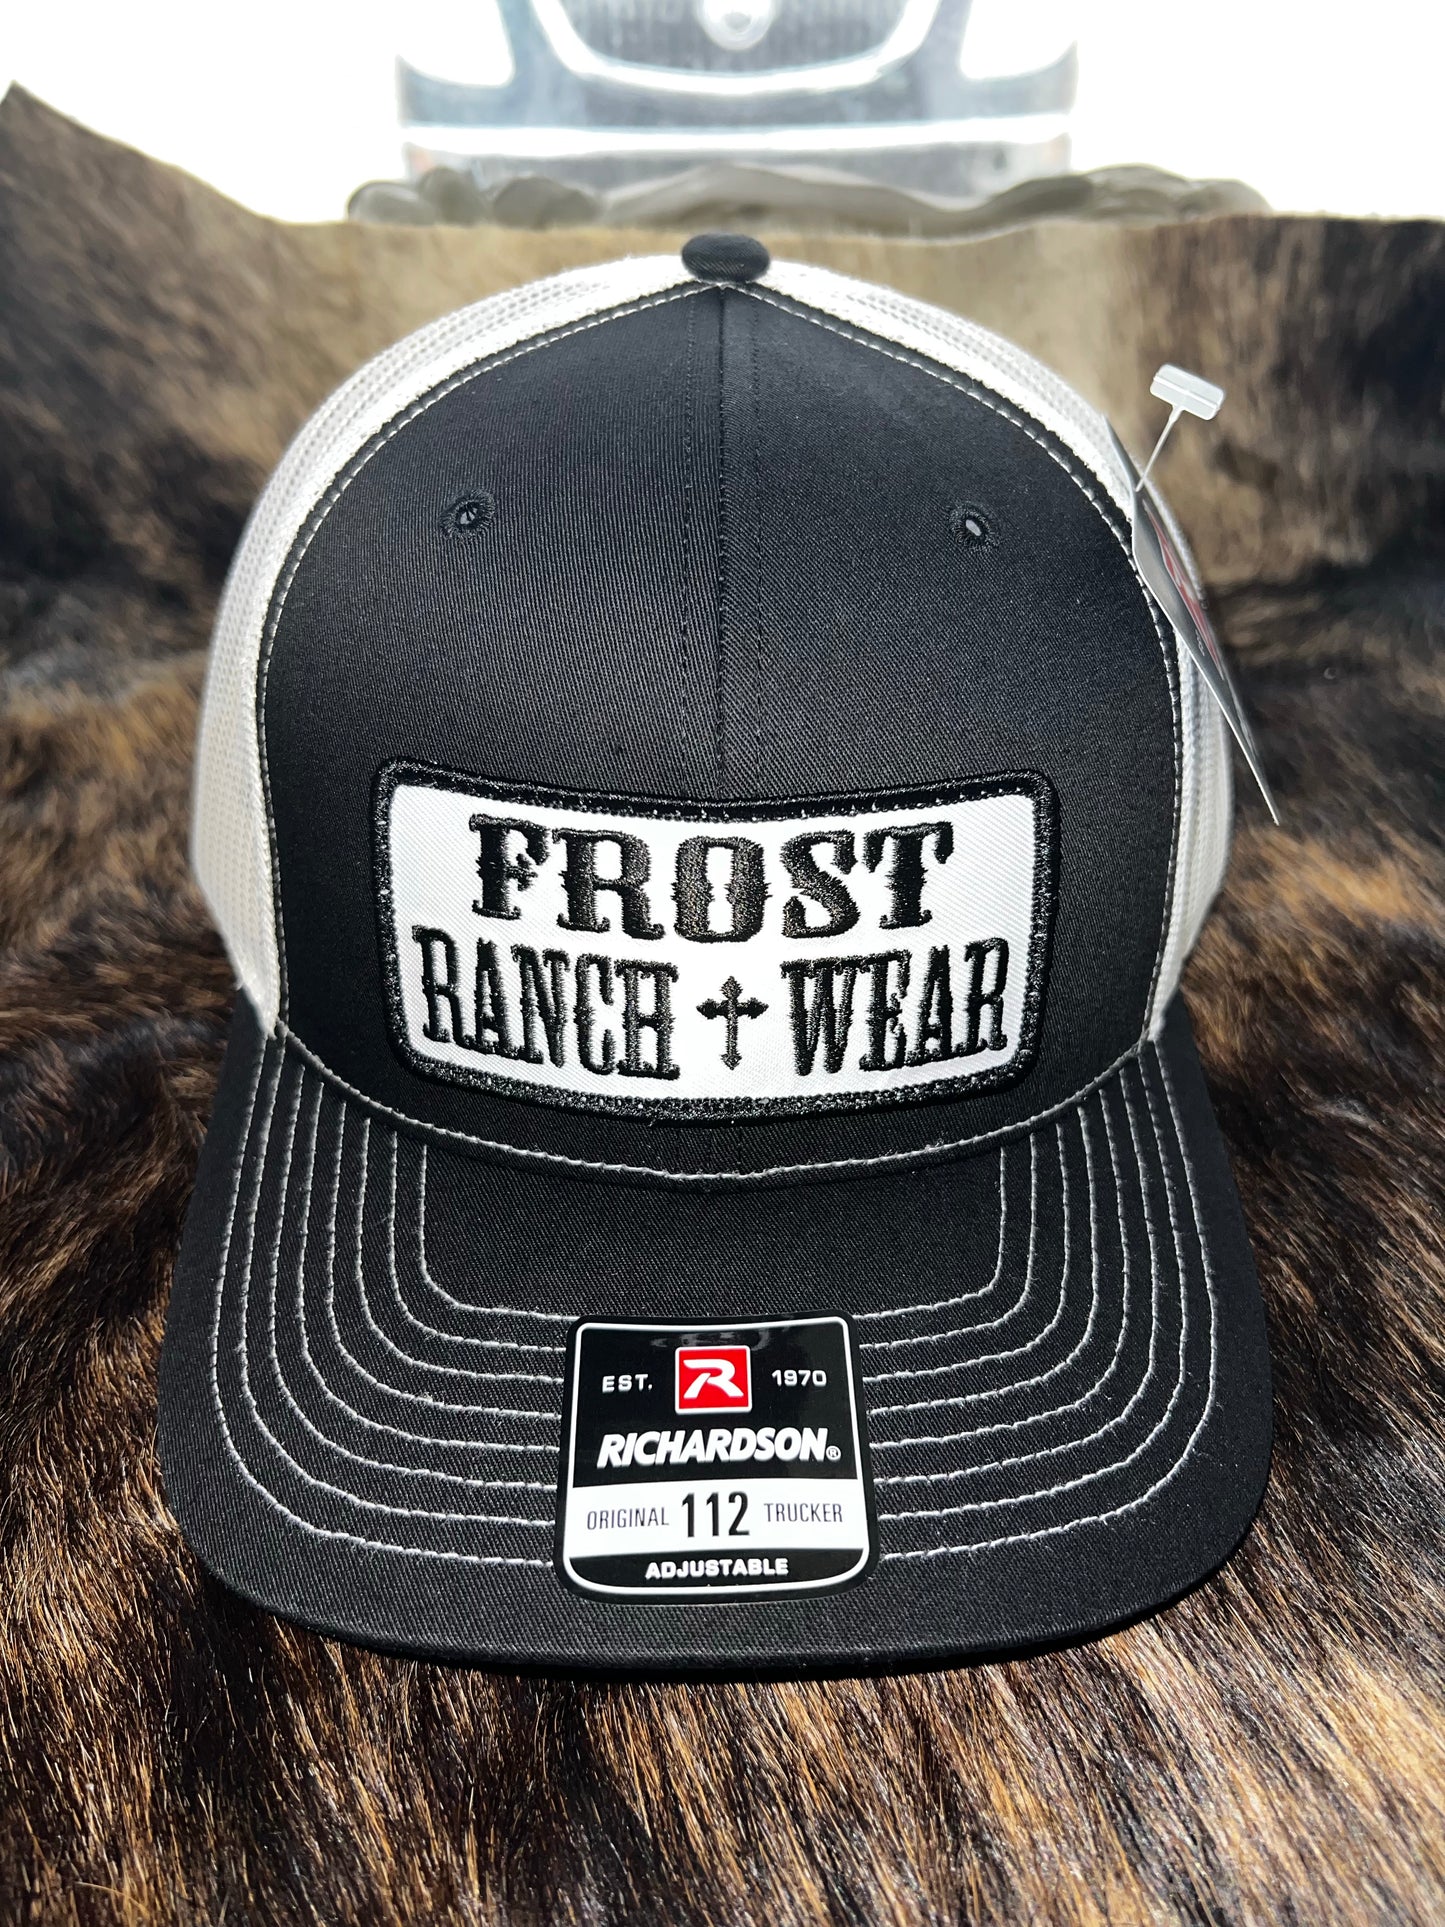 Frost Ranch Wear Patch Caps